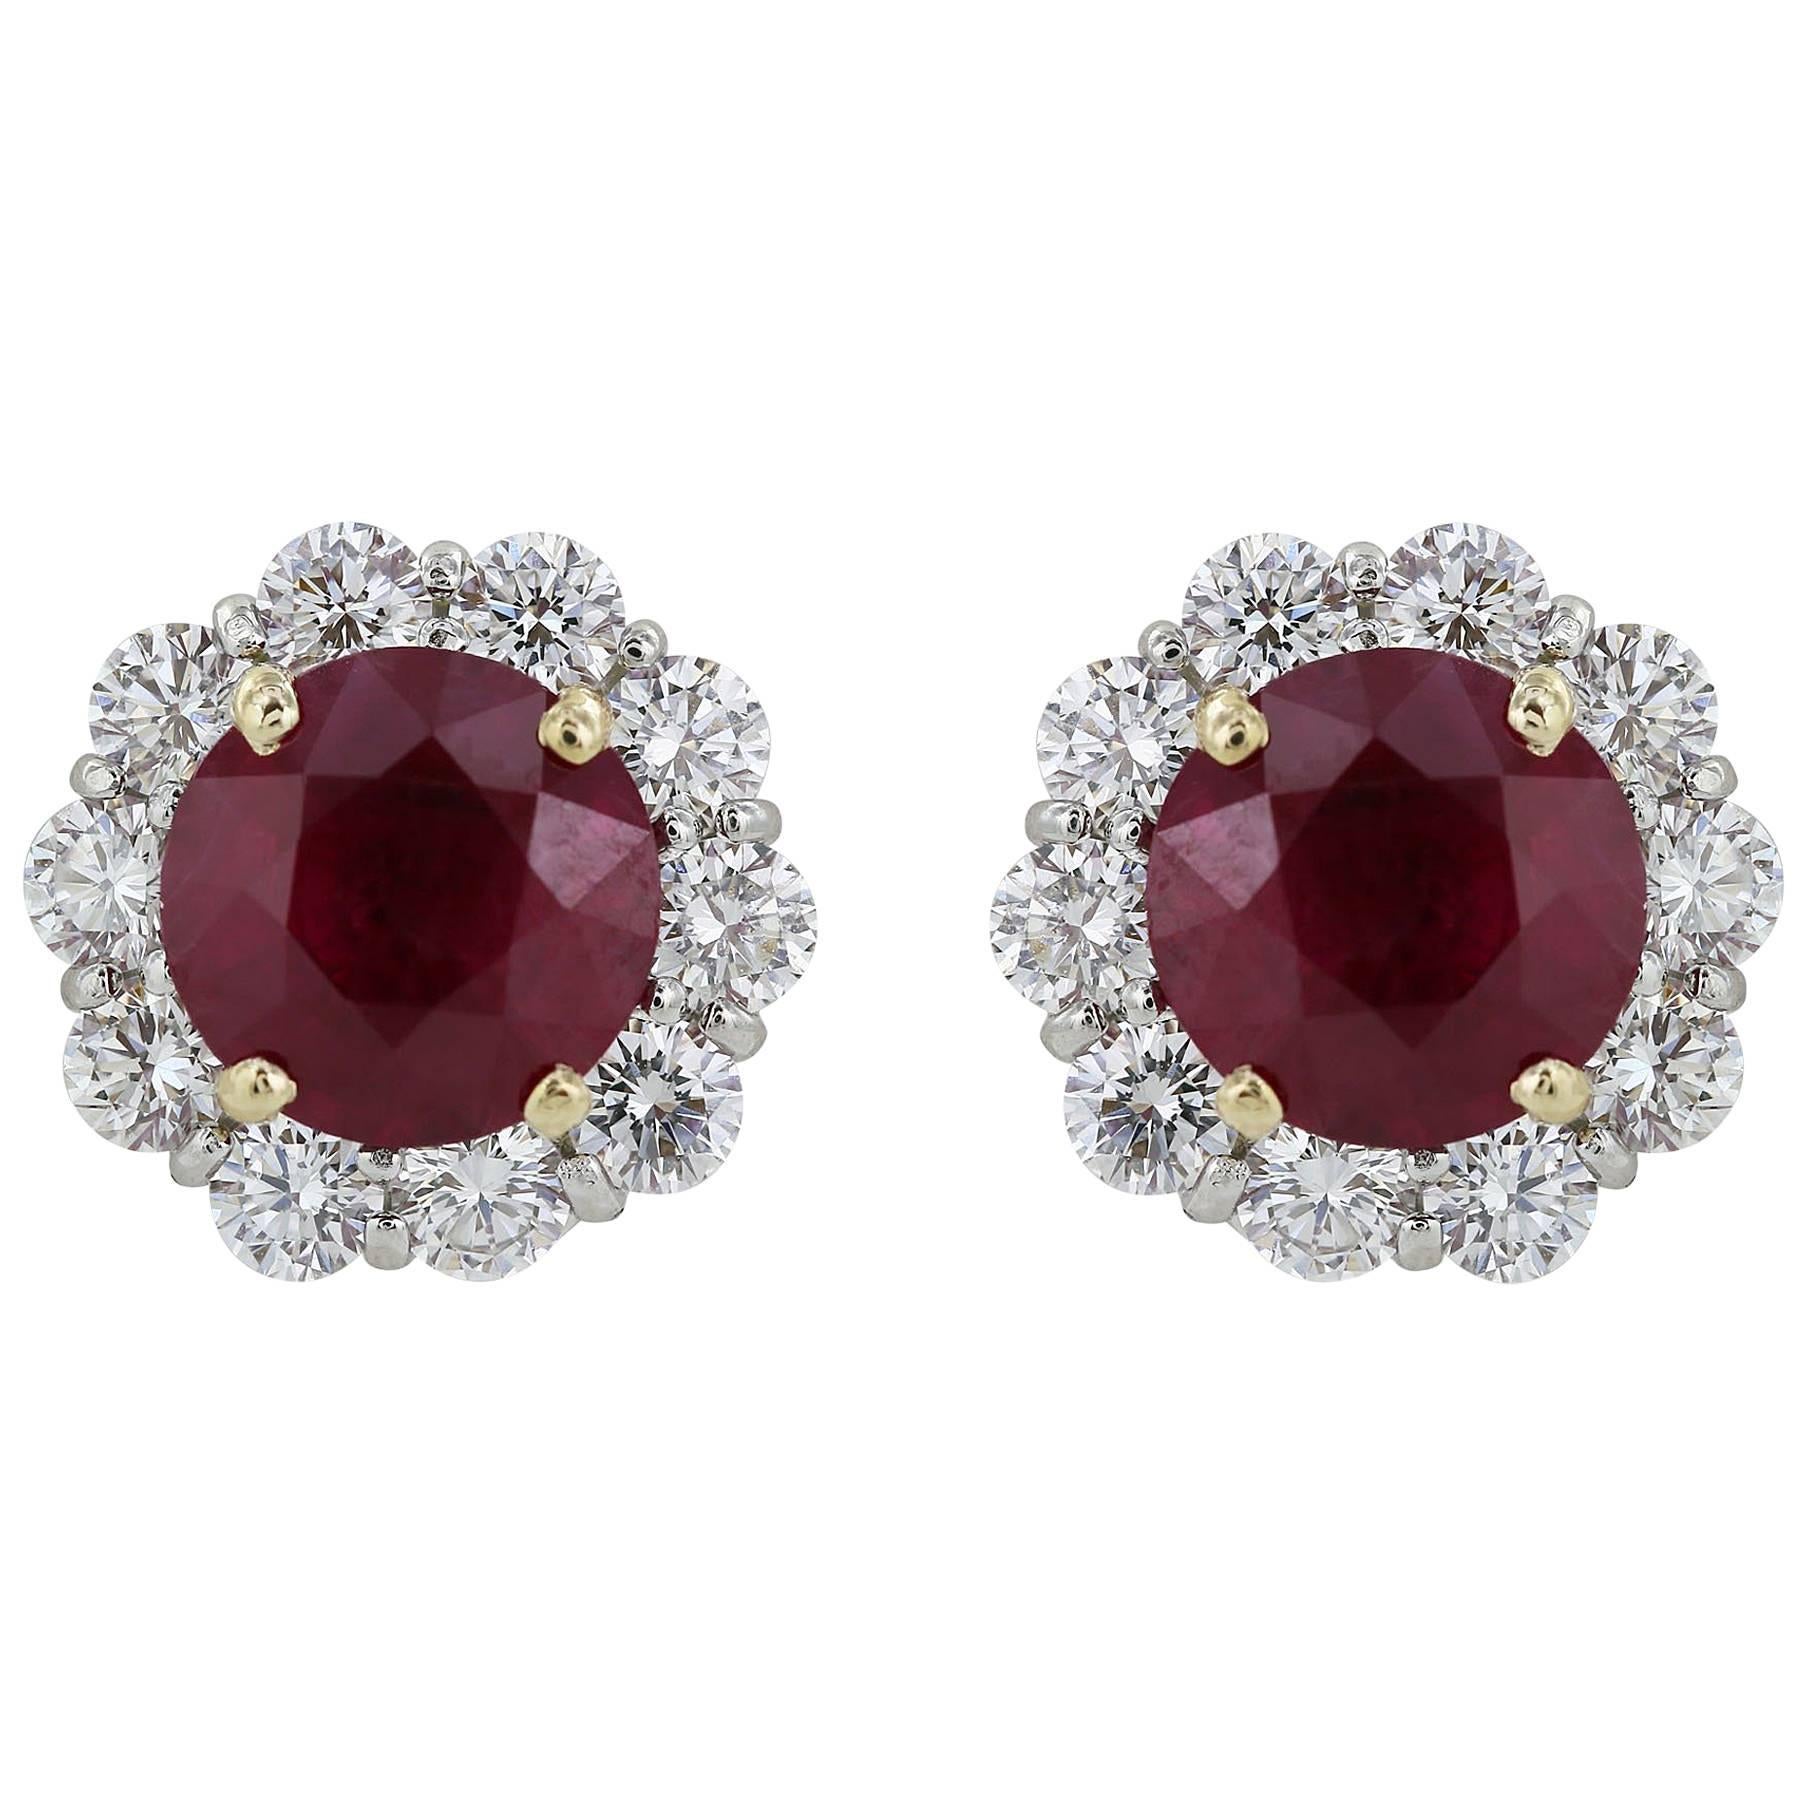 4.56 Carat GIA Natural Burma Ruby Diamond Earrings For Sale